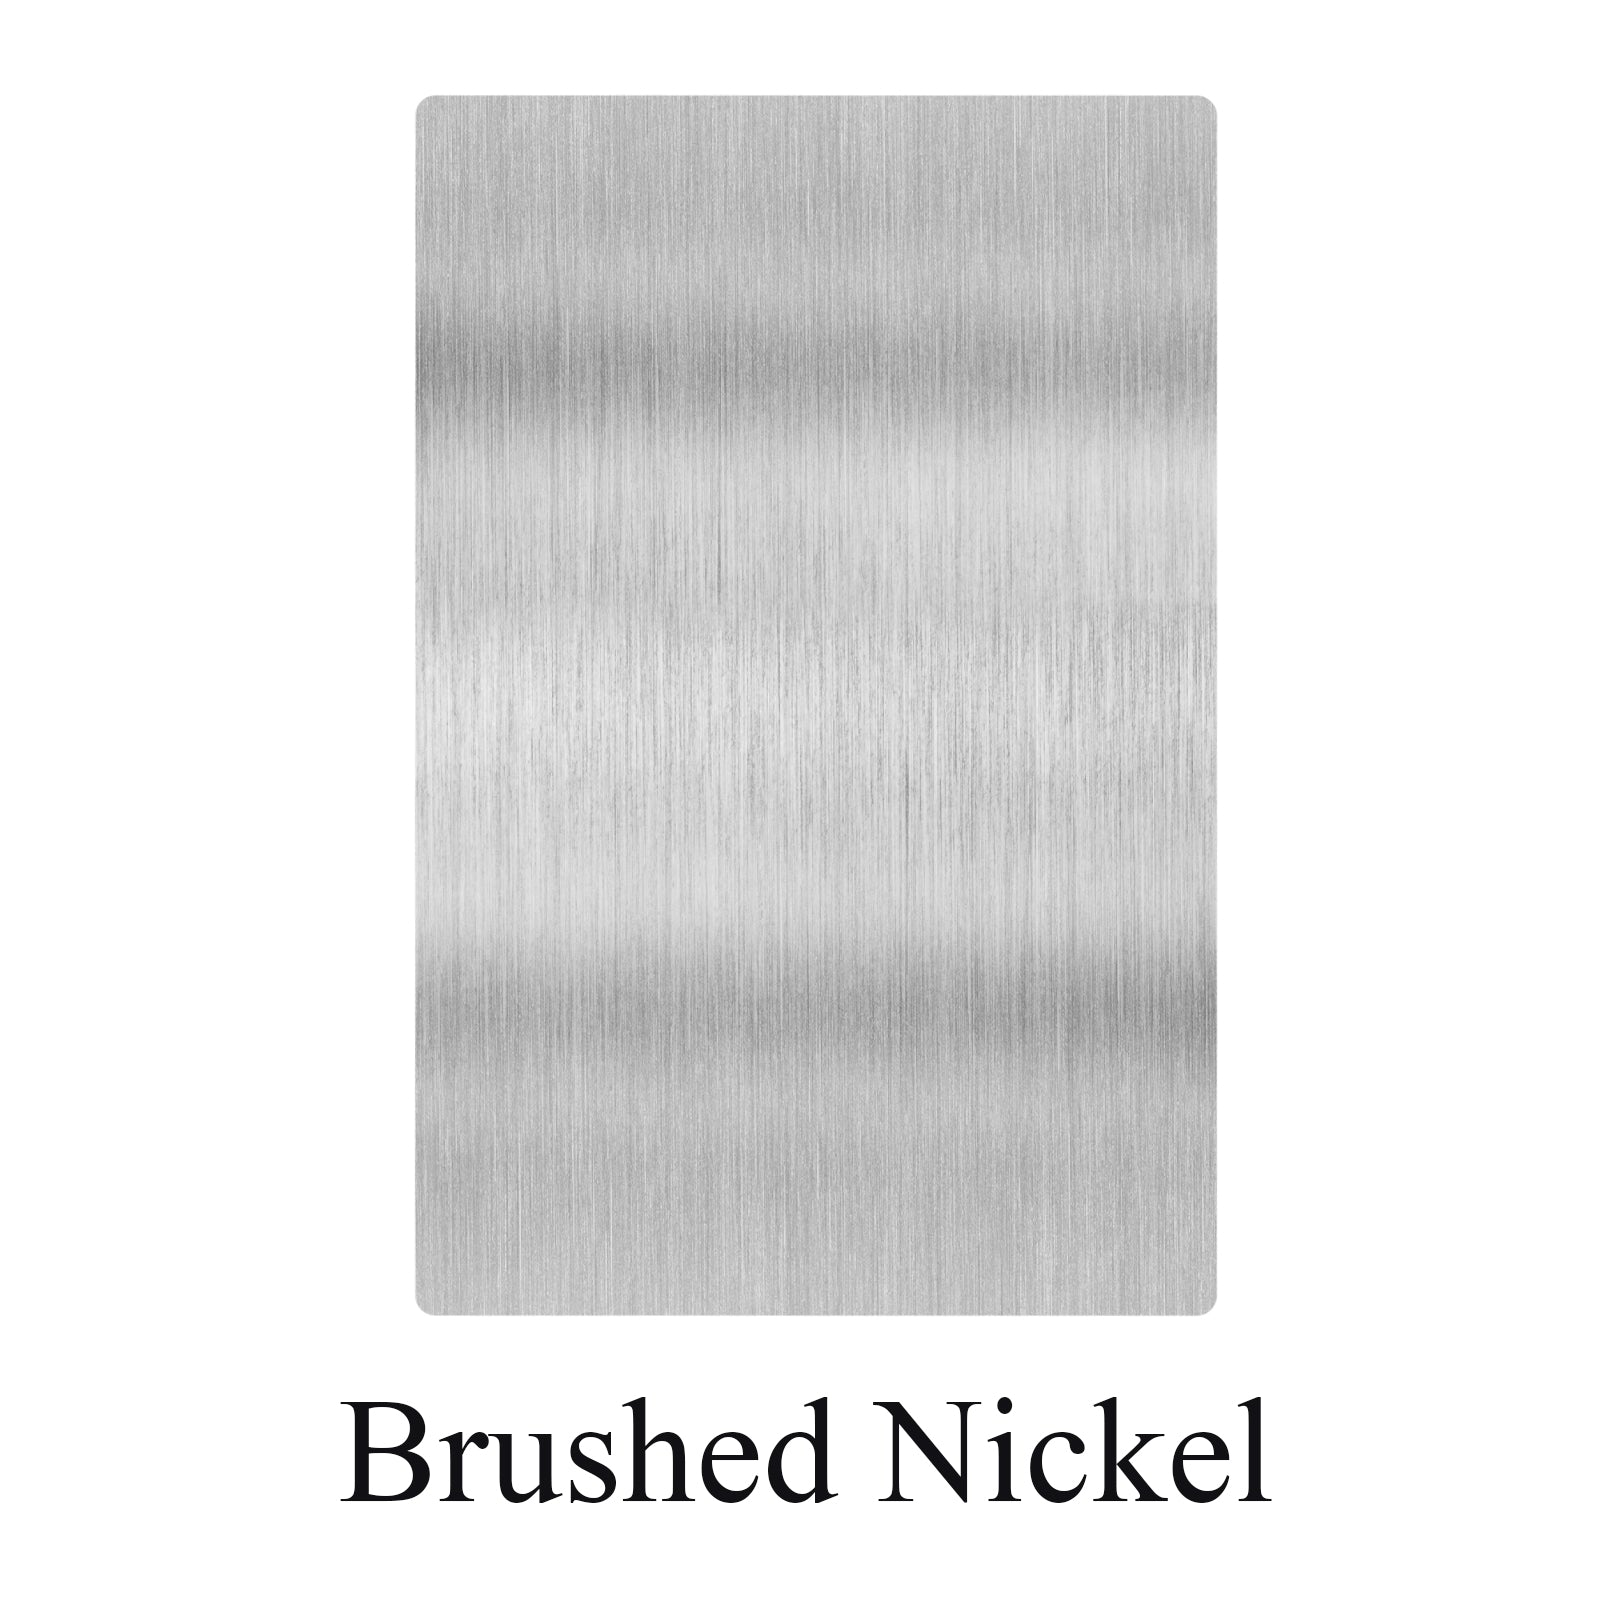 Akicon Brushed Nickel Stainless Steel Sample